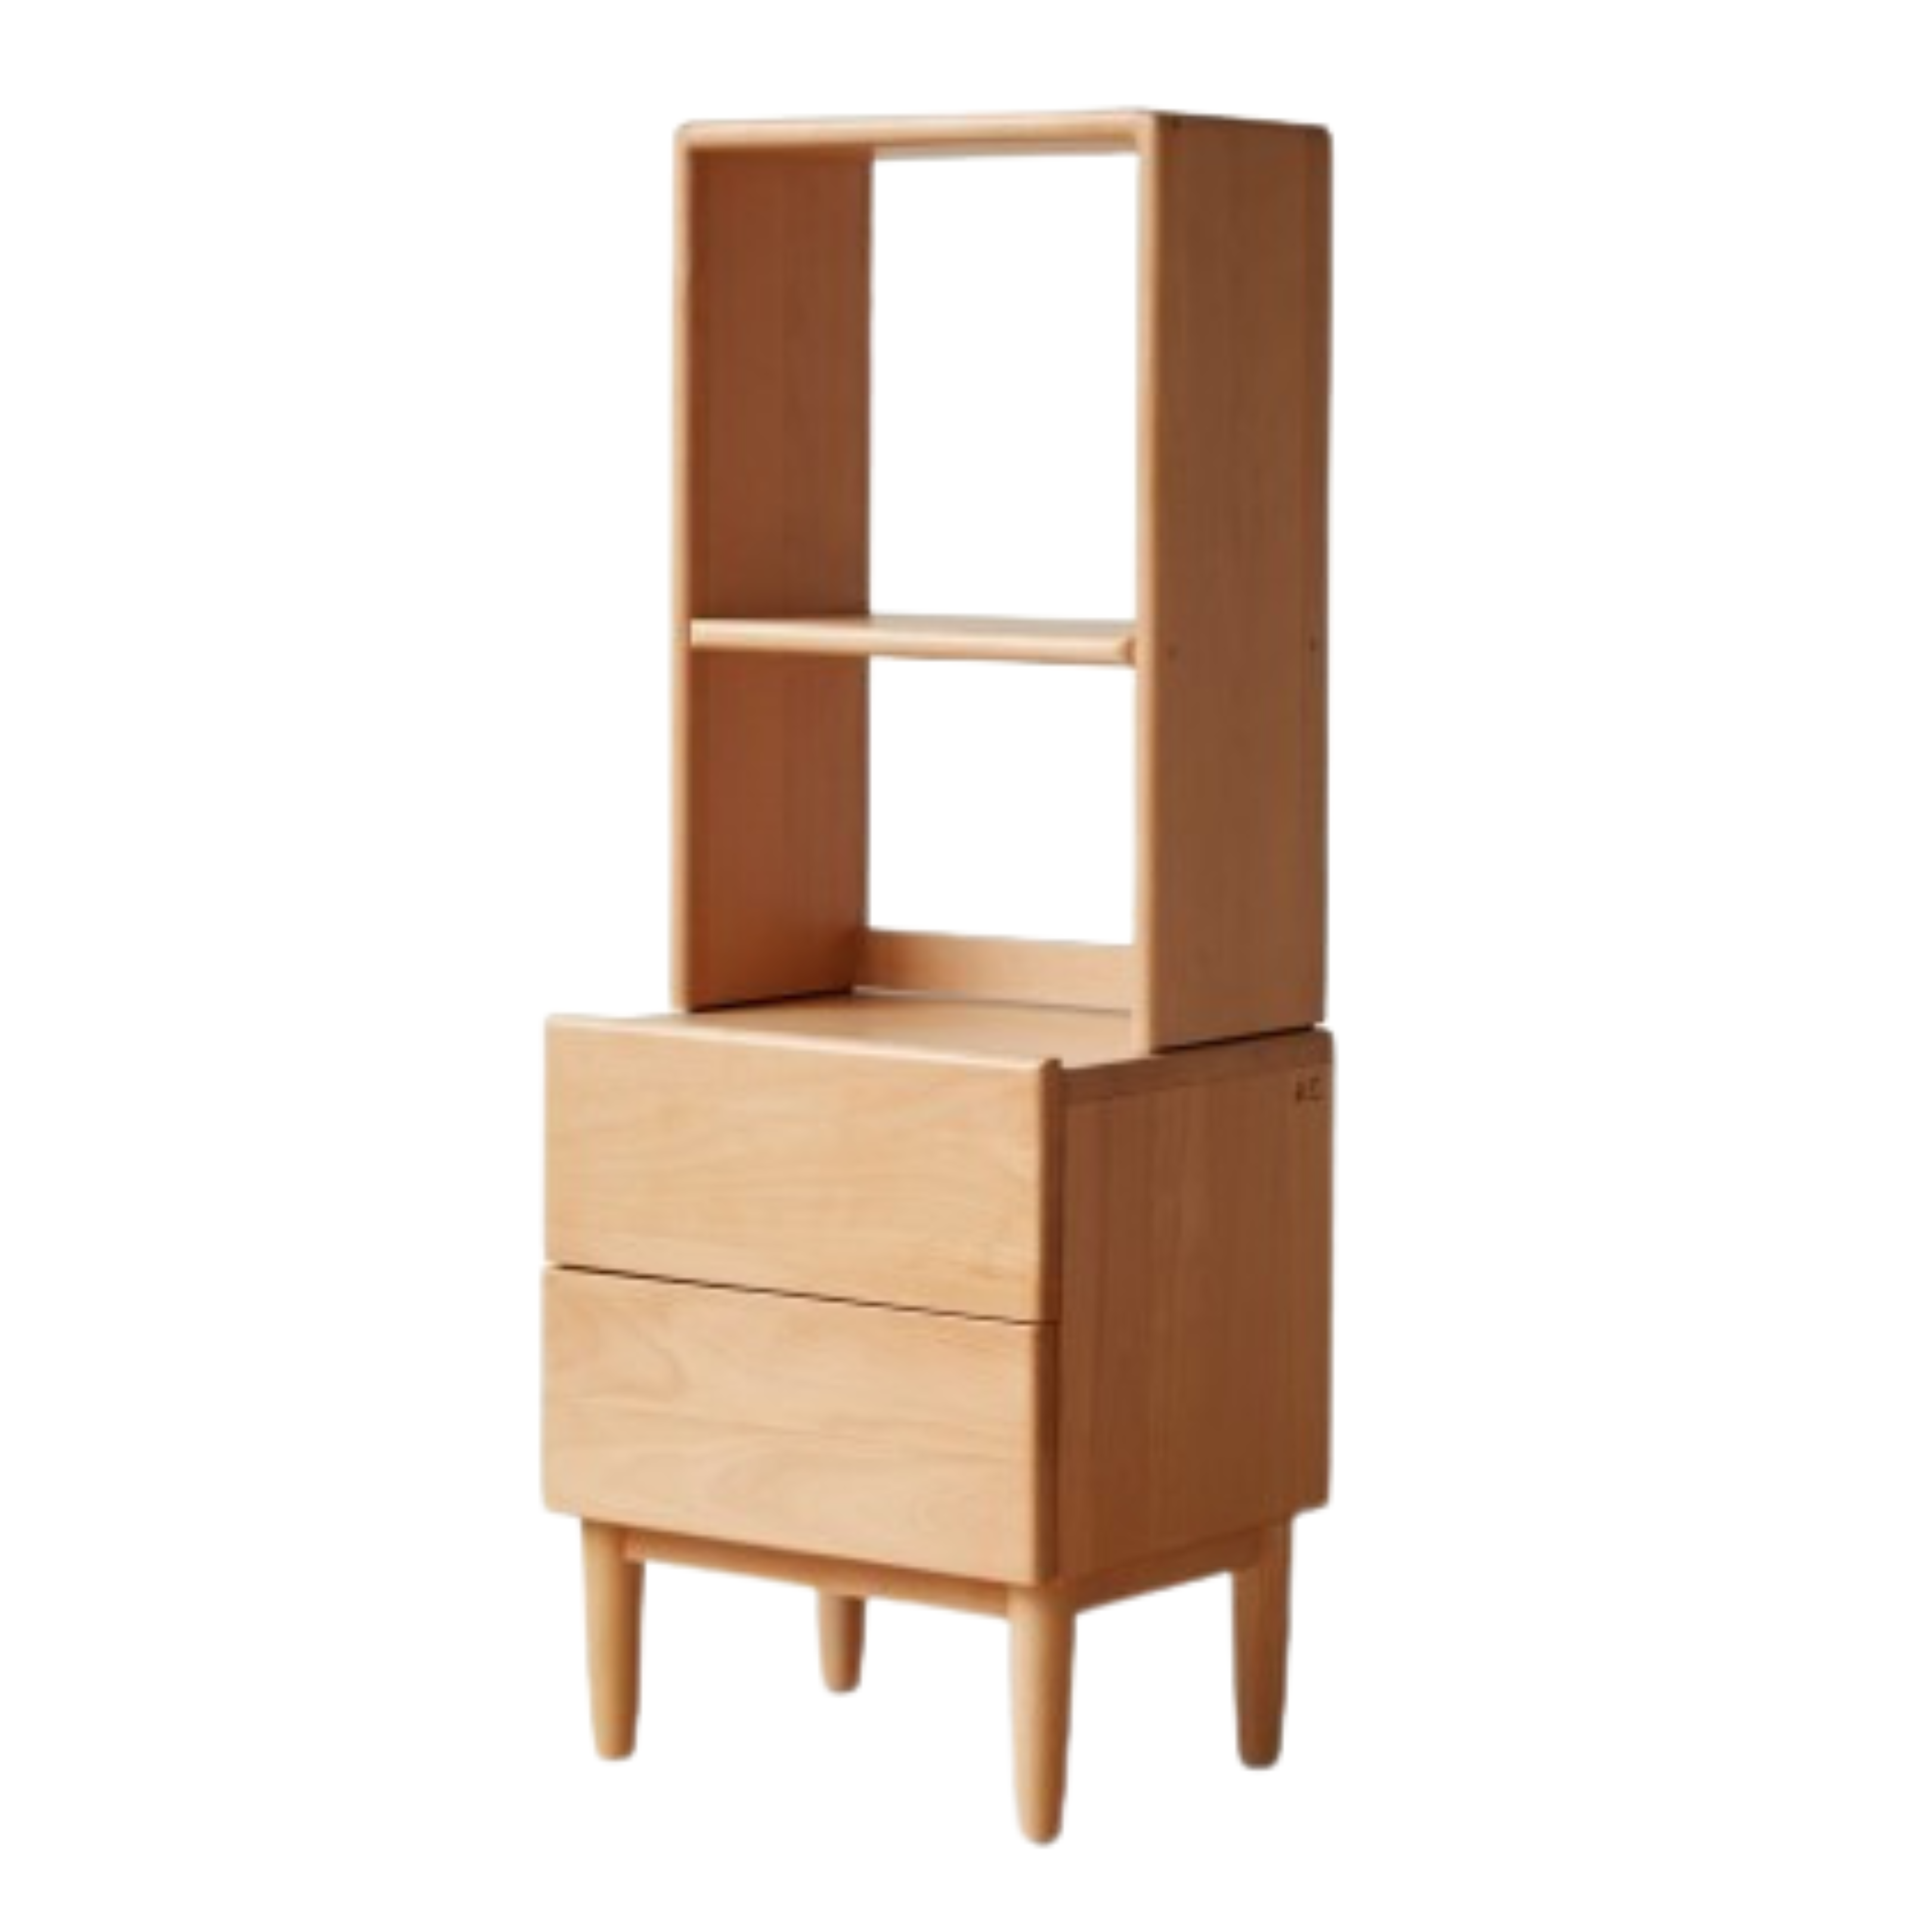 Beech solid wood bedside table and elevated storage rack, bedside bookshelf)